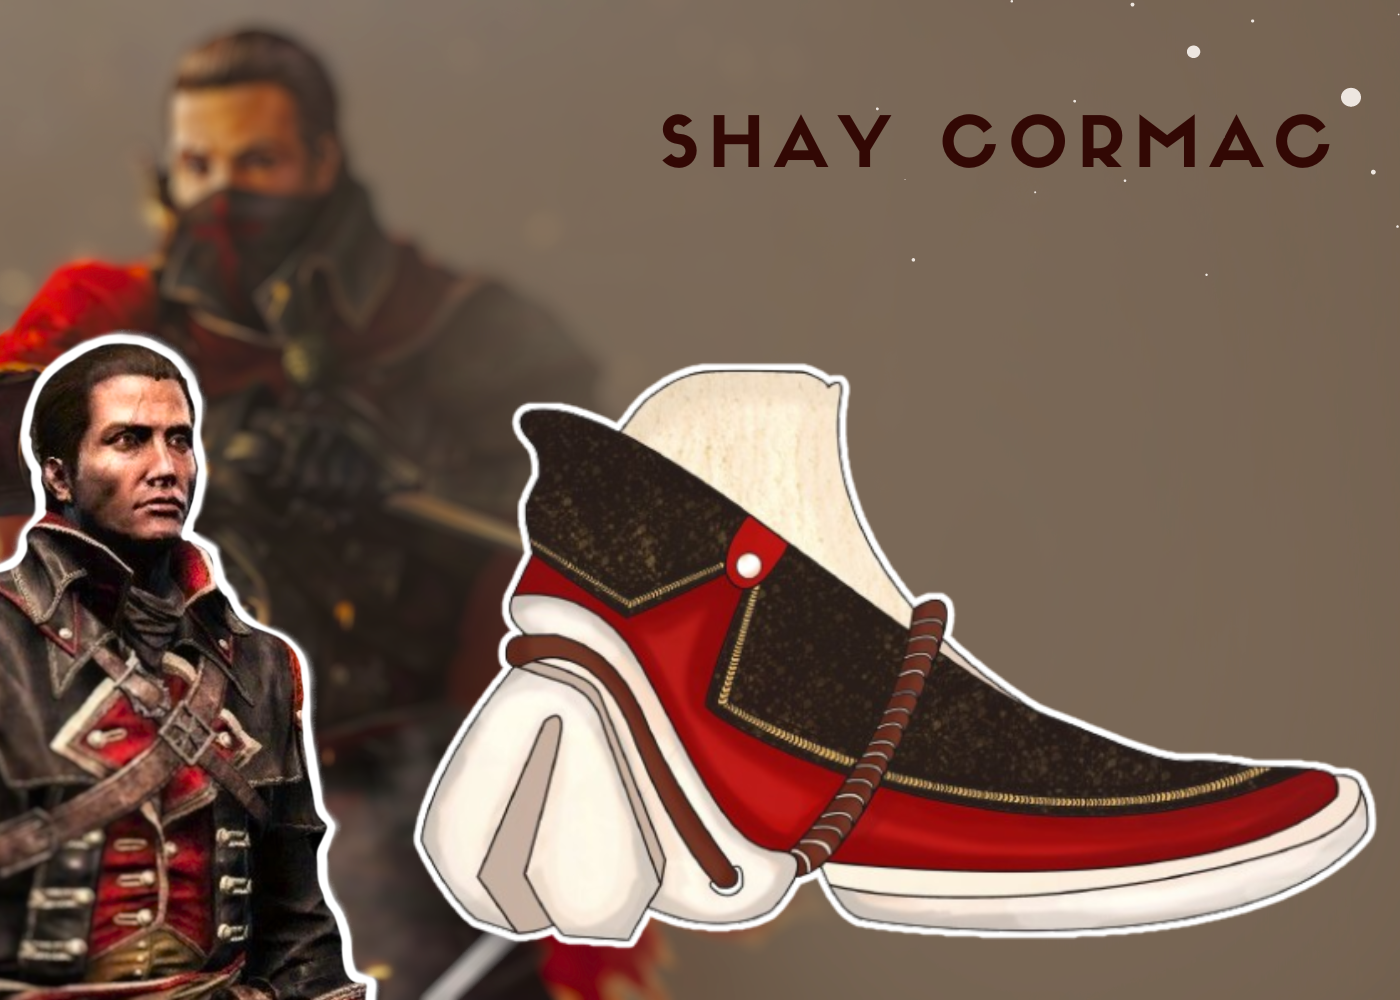 Assassin's Creed assassins footweardesigner footwearcollection SneakerDesign Neha FDDI ConceptDesigning footwearconcept sneakercollection